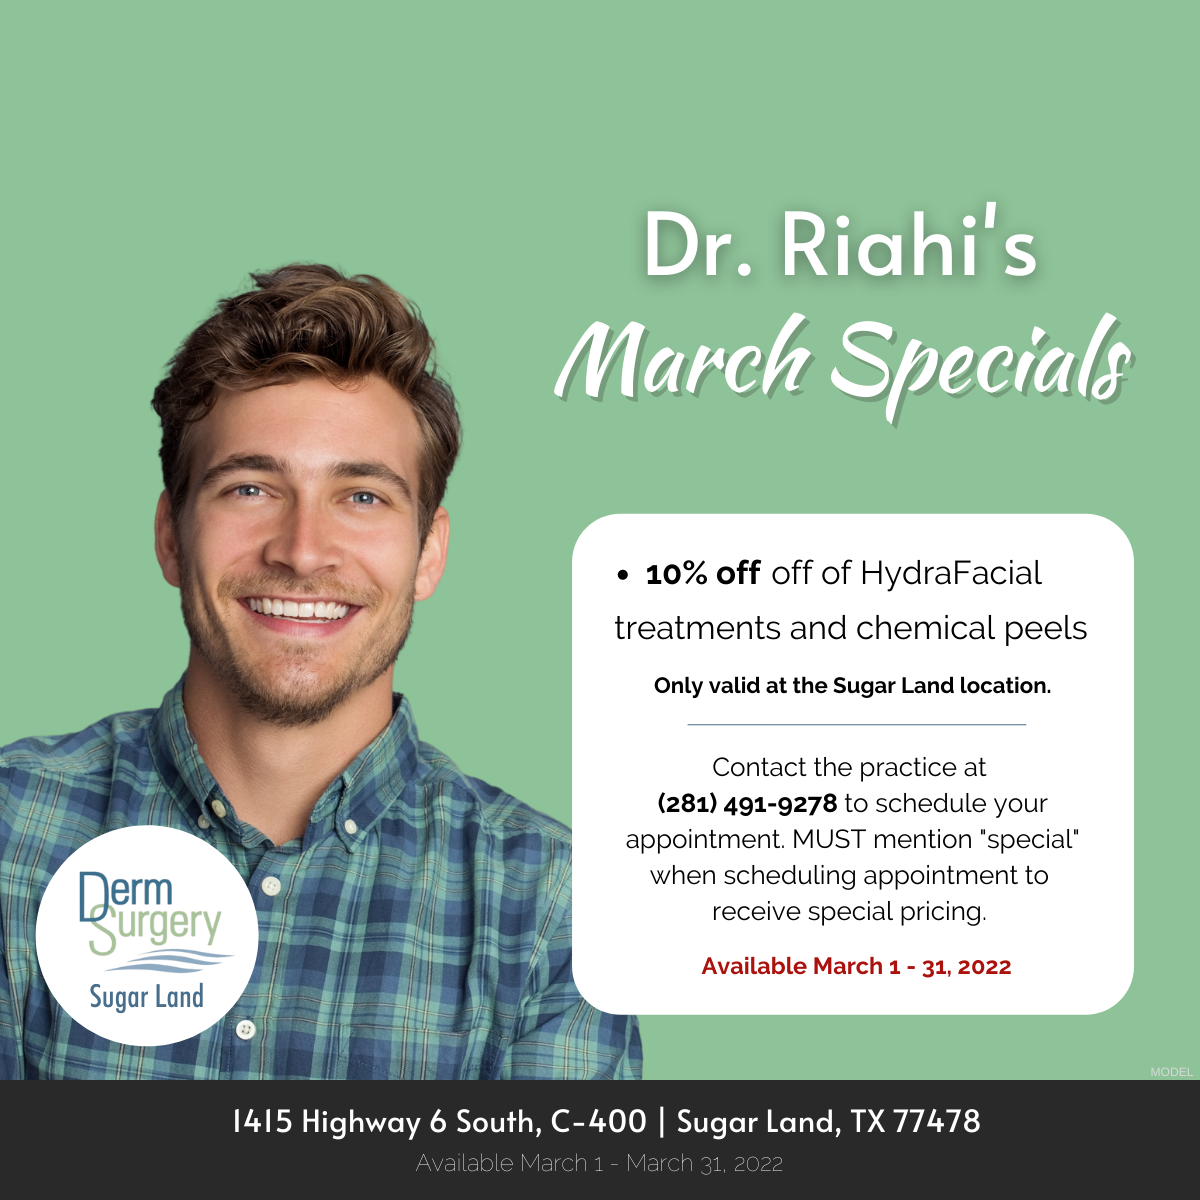 Dr. Riahi's March Specials